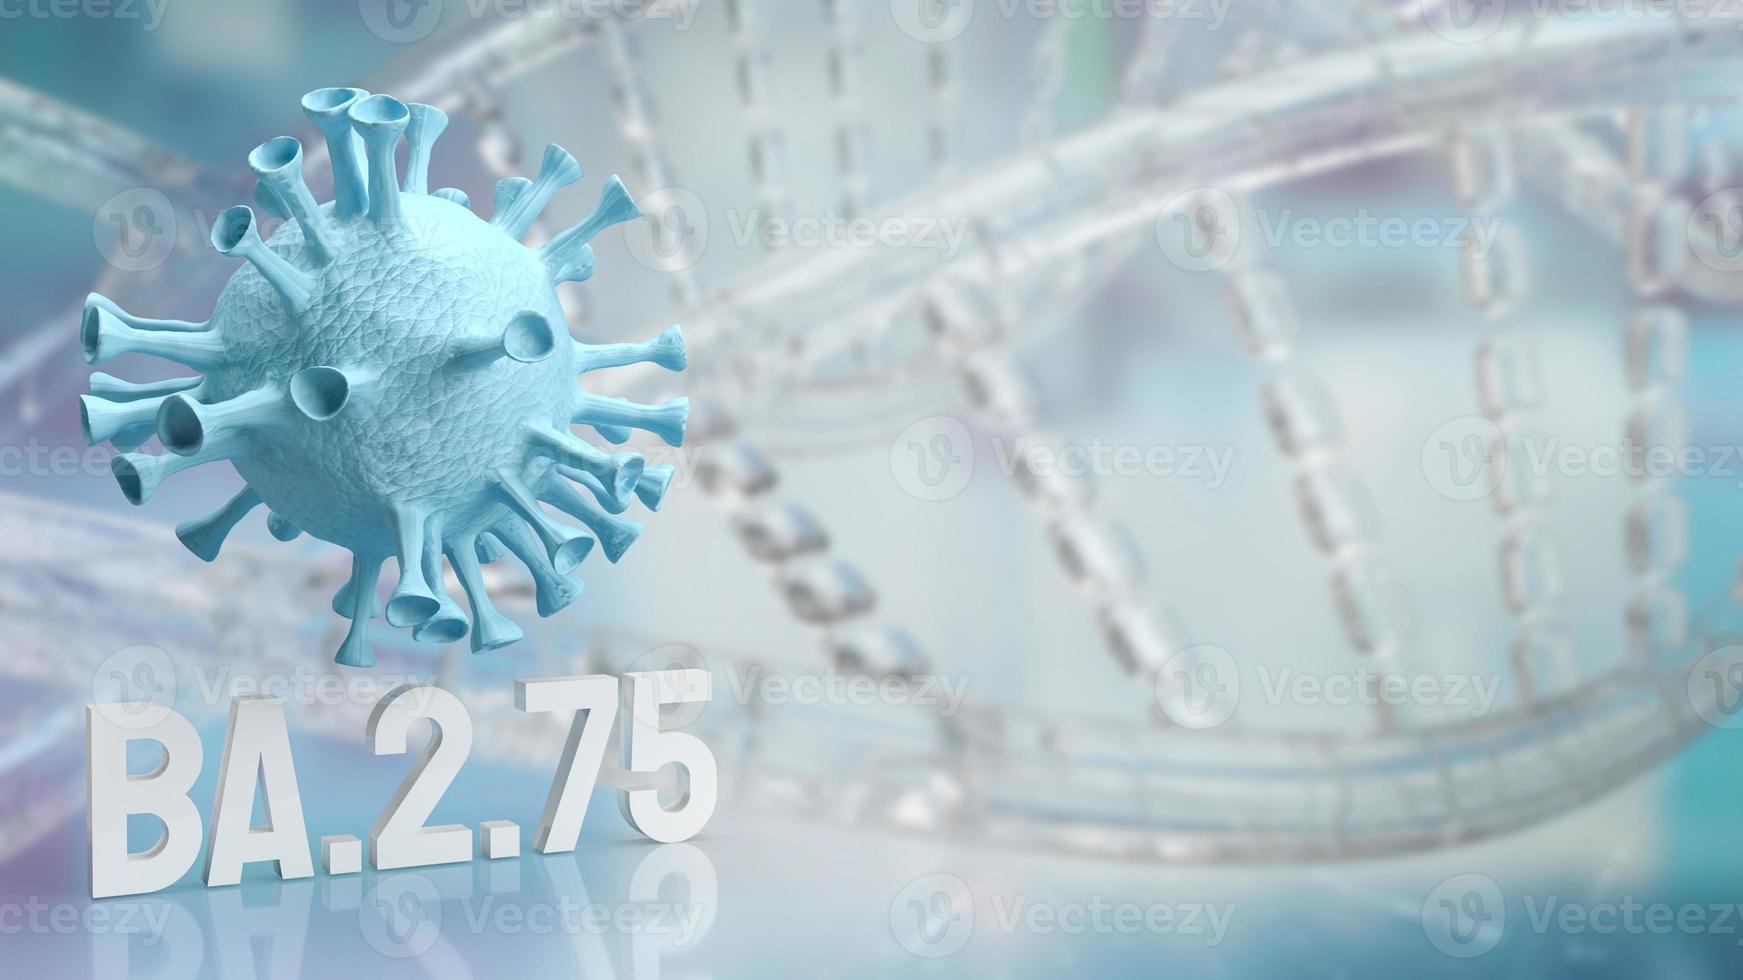 The  coronavirus ba.2.75 for outbreak or medical concept 3d rendering photo